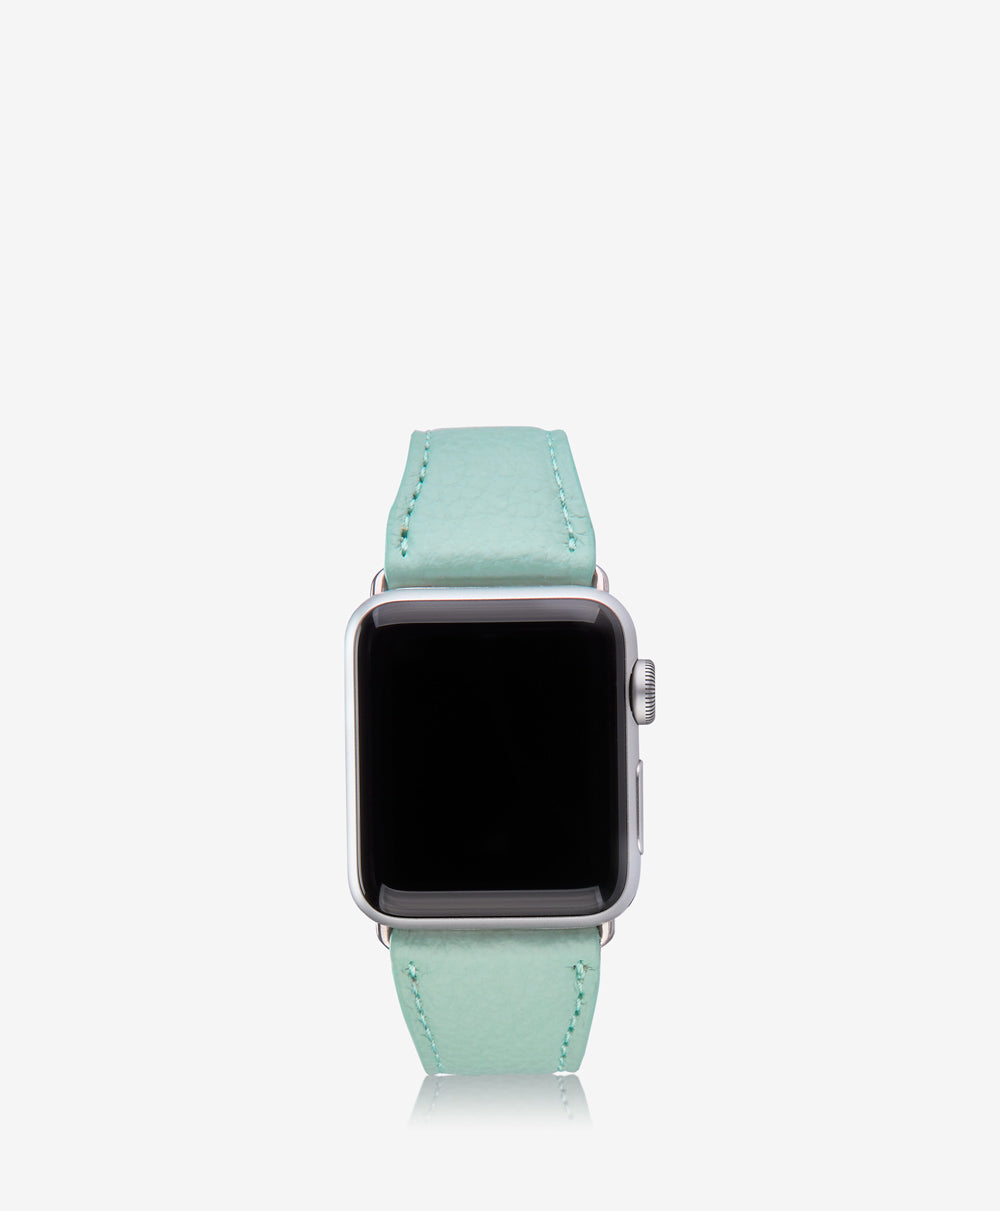 GiGi New York Small Apple Watch Band Azure Pebble Grain Leather